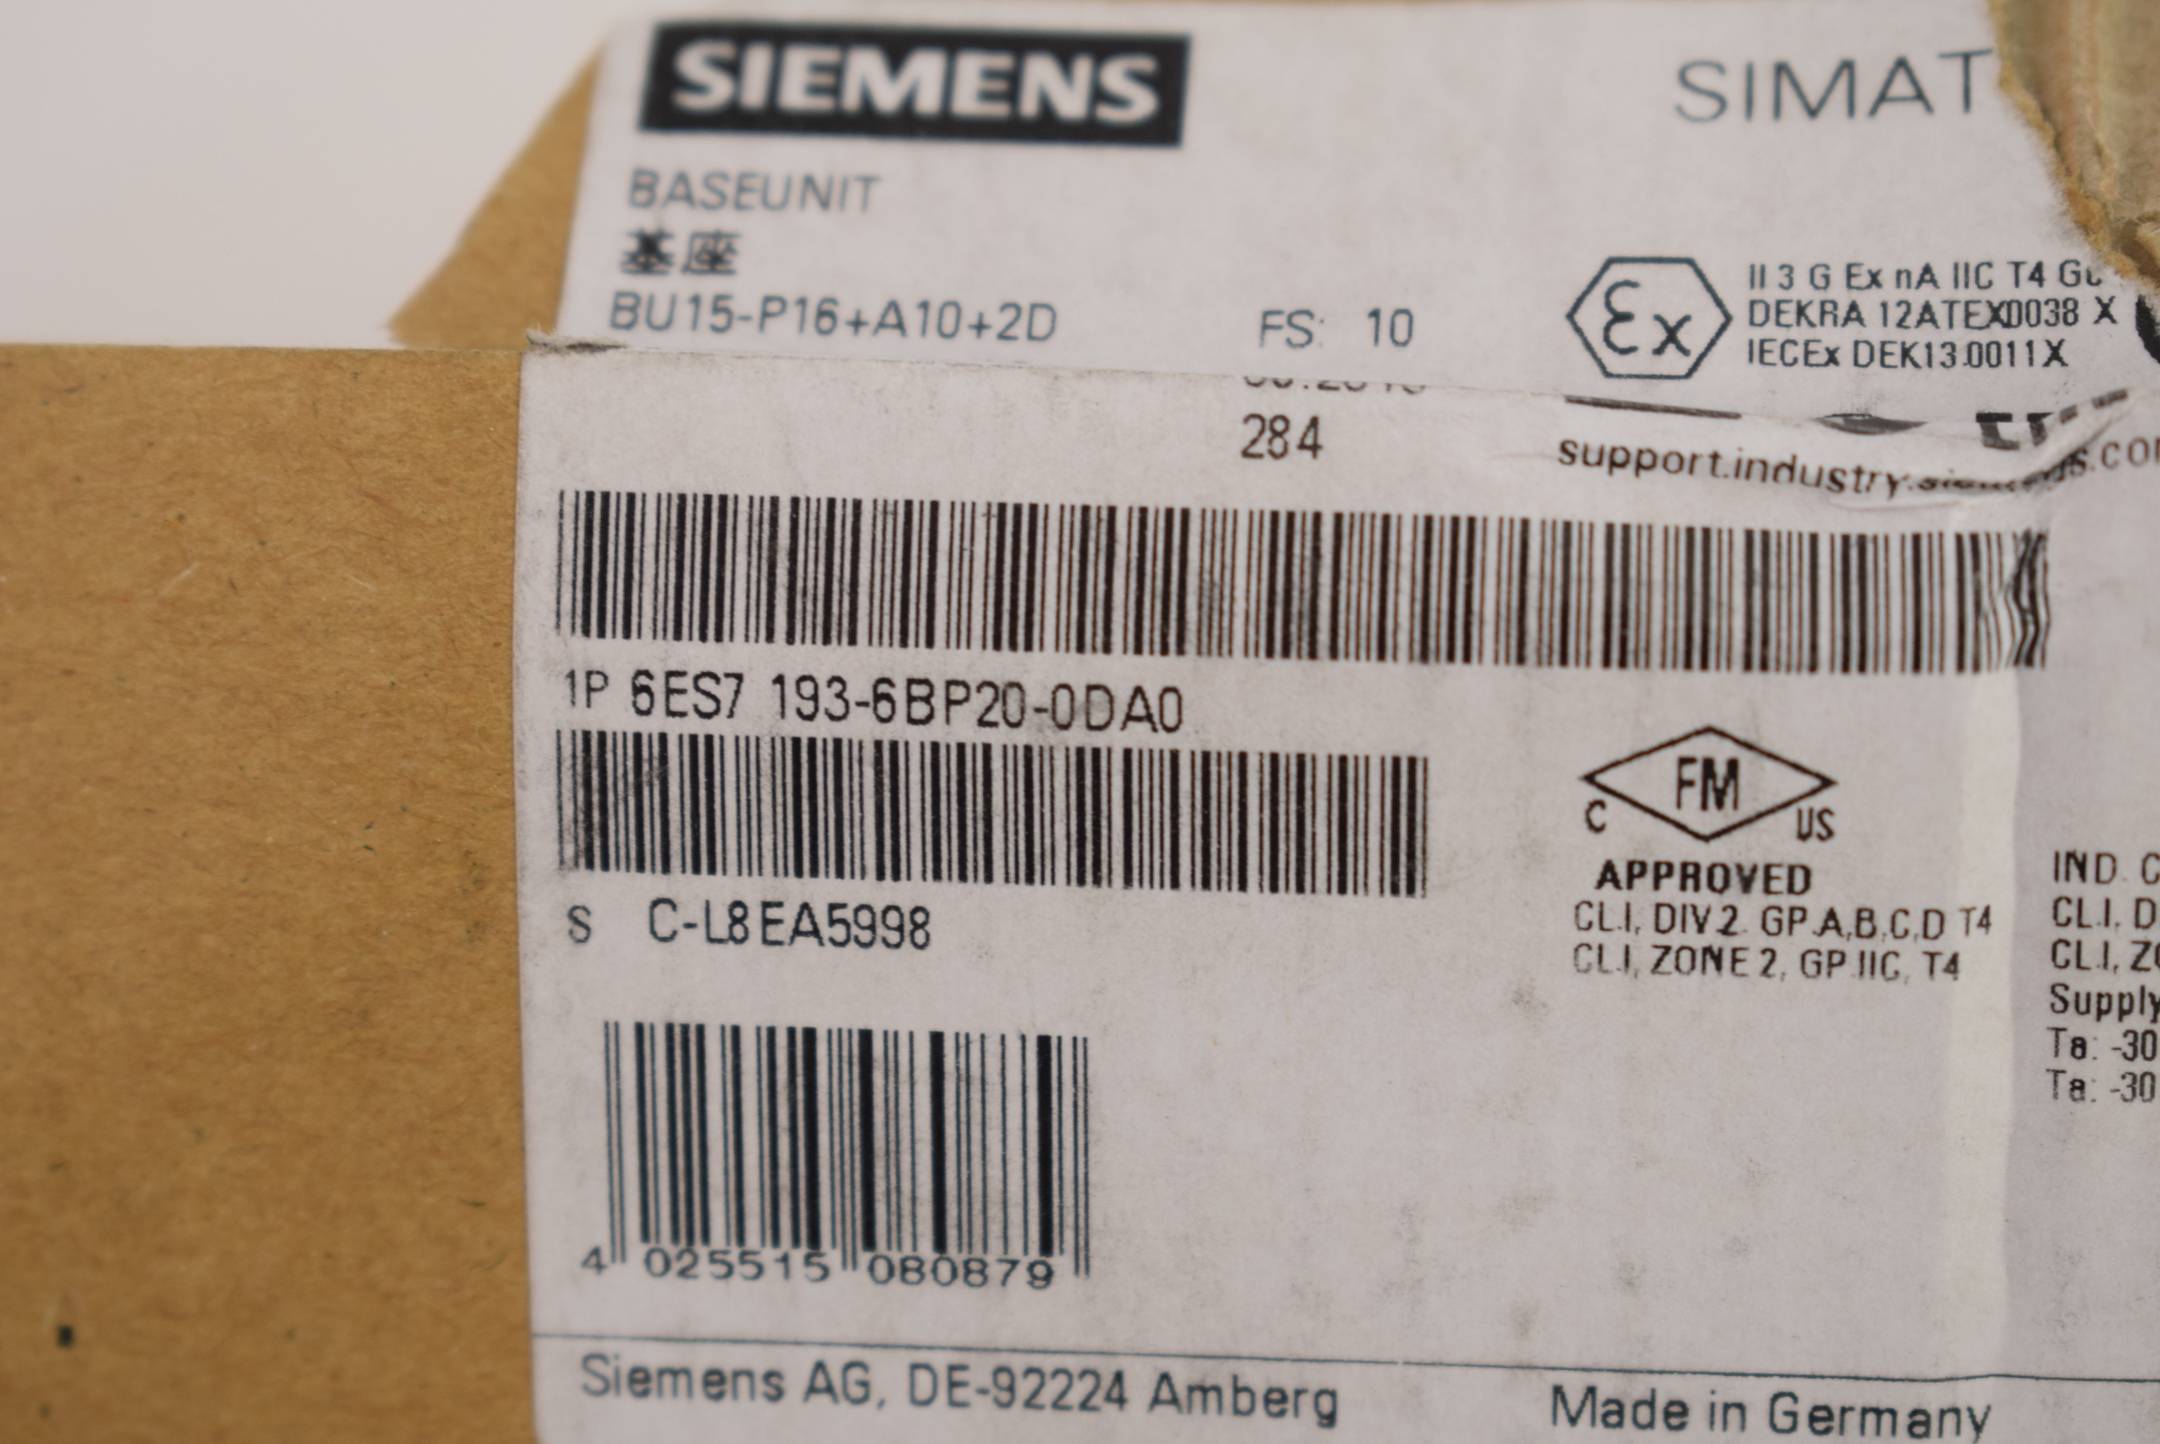 Siemens BaseUnit ET200SP 6ES7193-6BP20-0DA0 ( 6ES7 193-6BP20-0DA0 ) E10